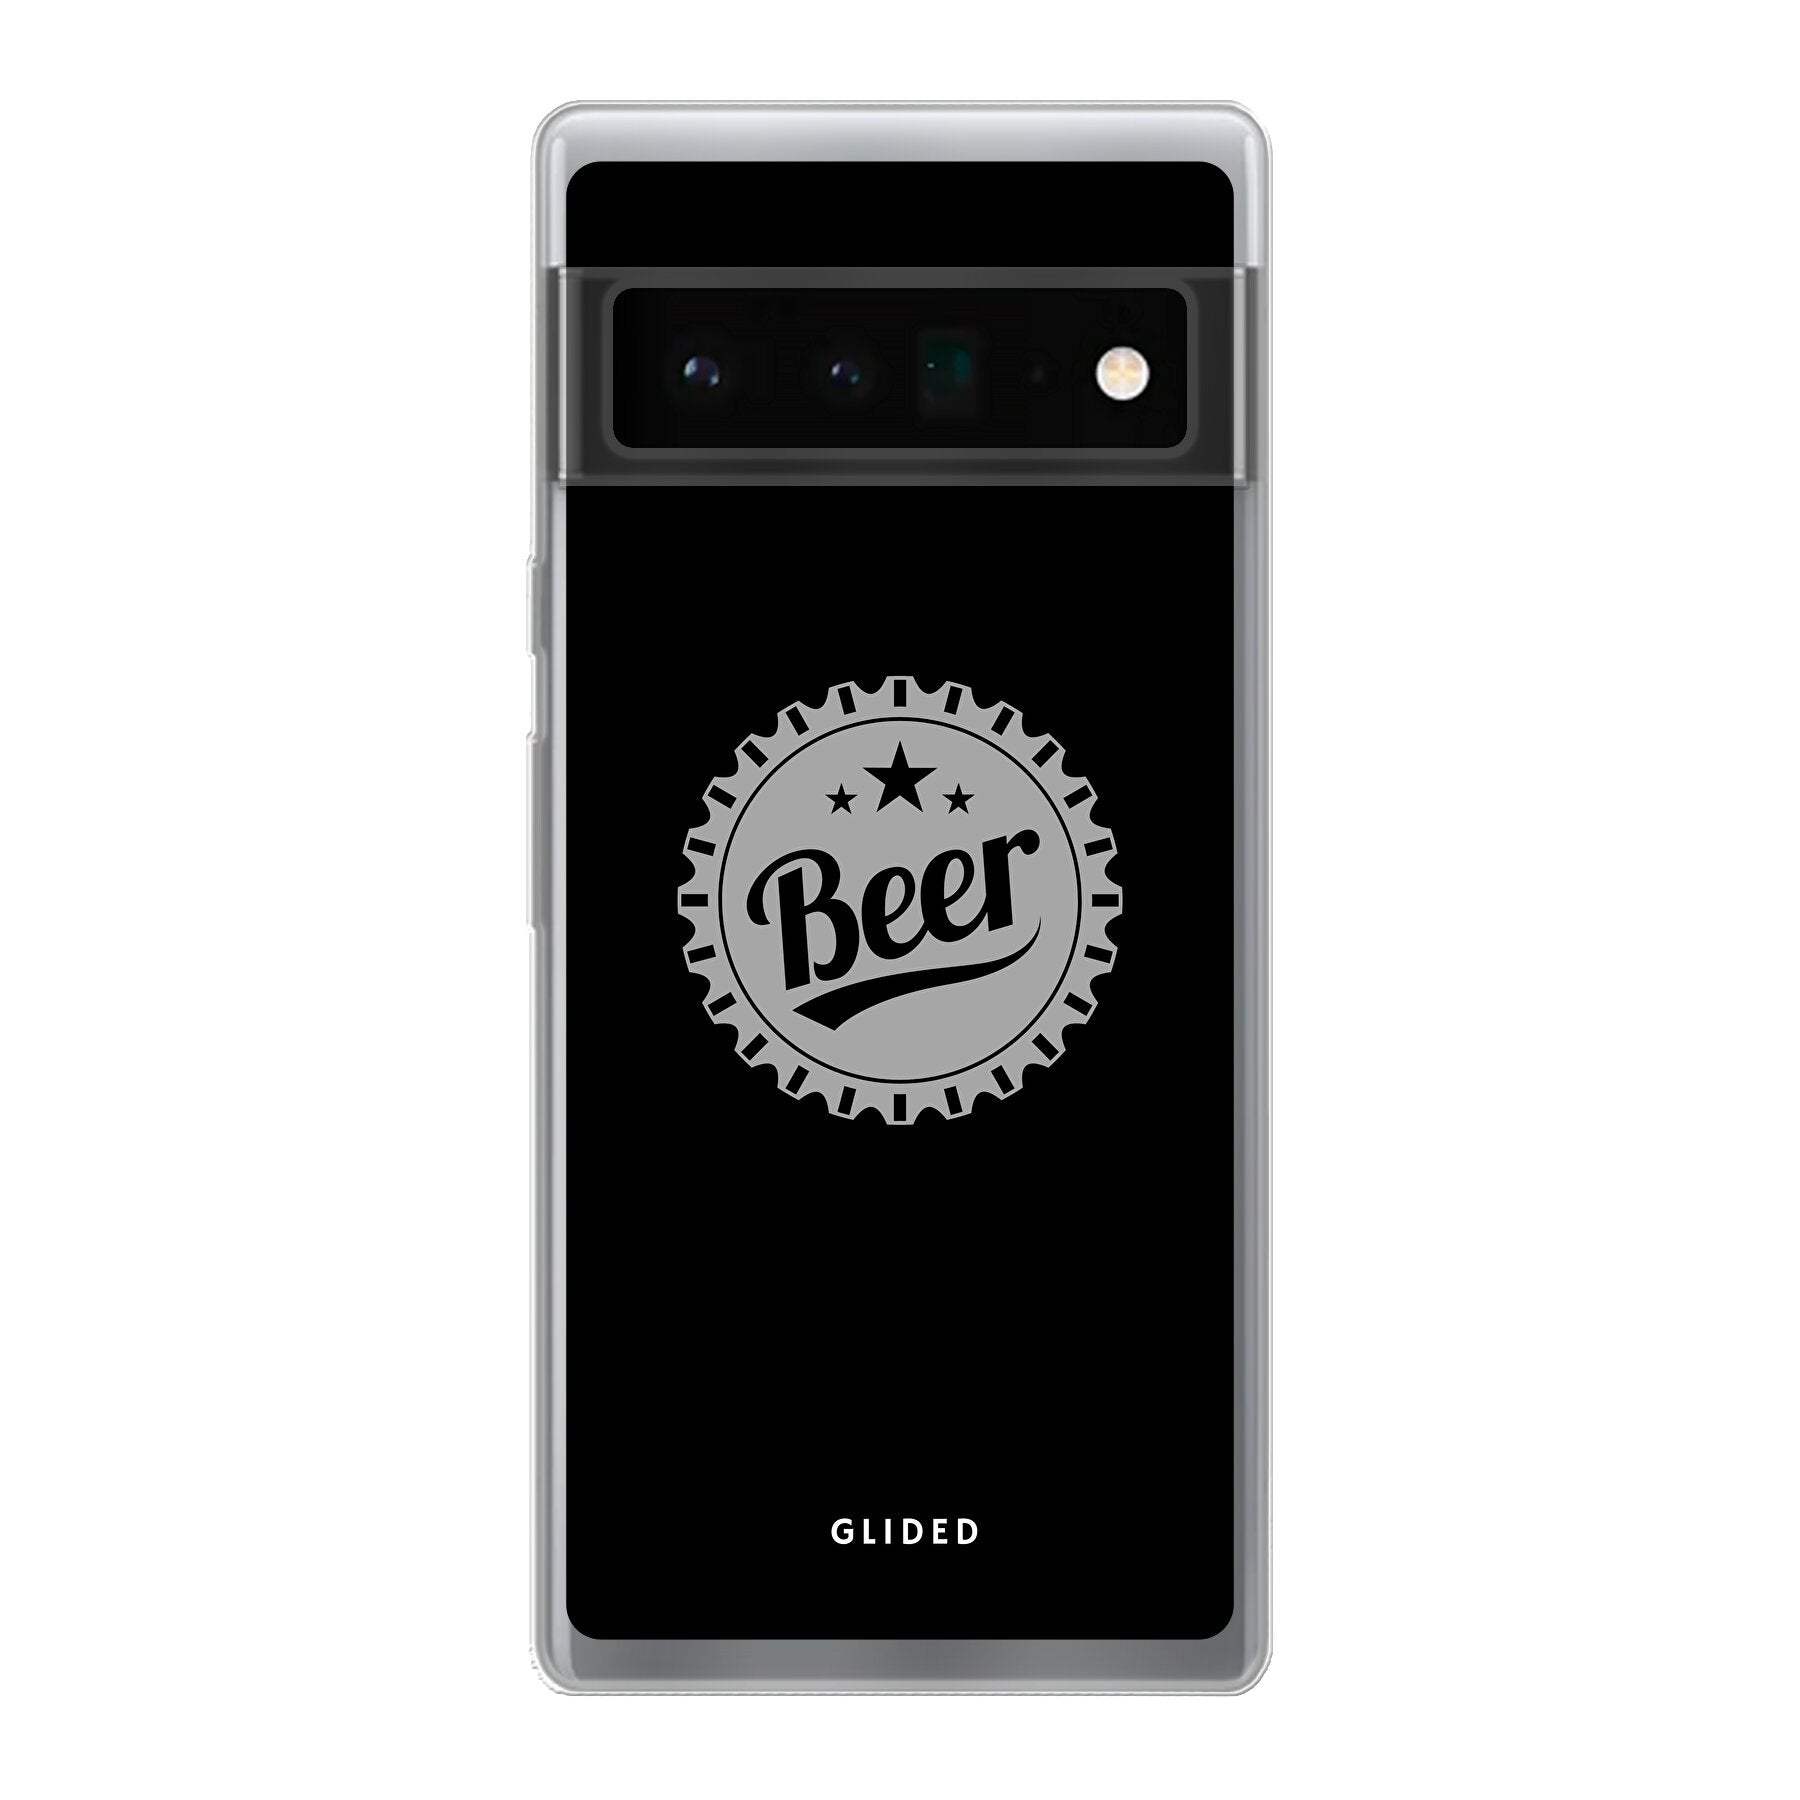 Cheers - Google Pixel 6 Pro - Soft case